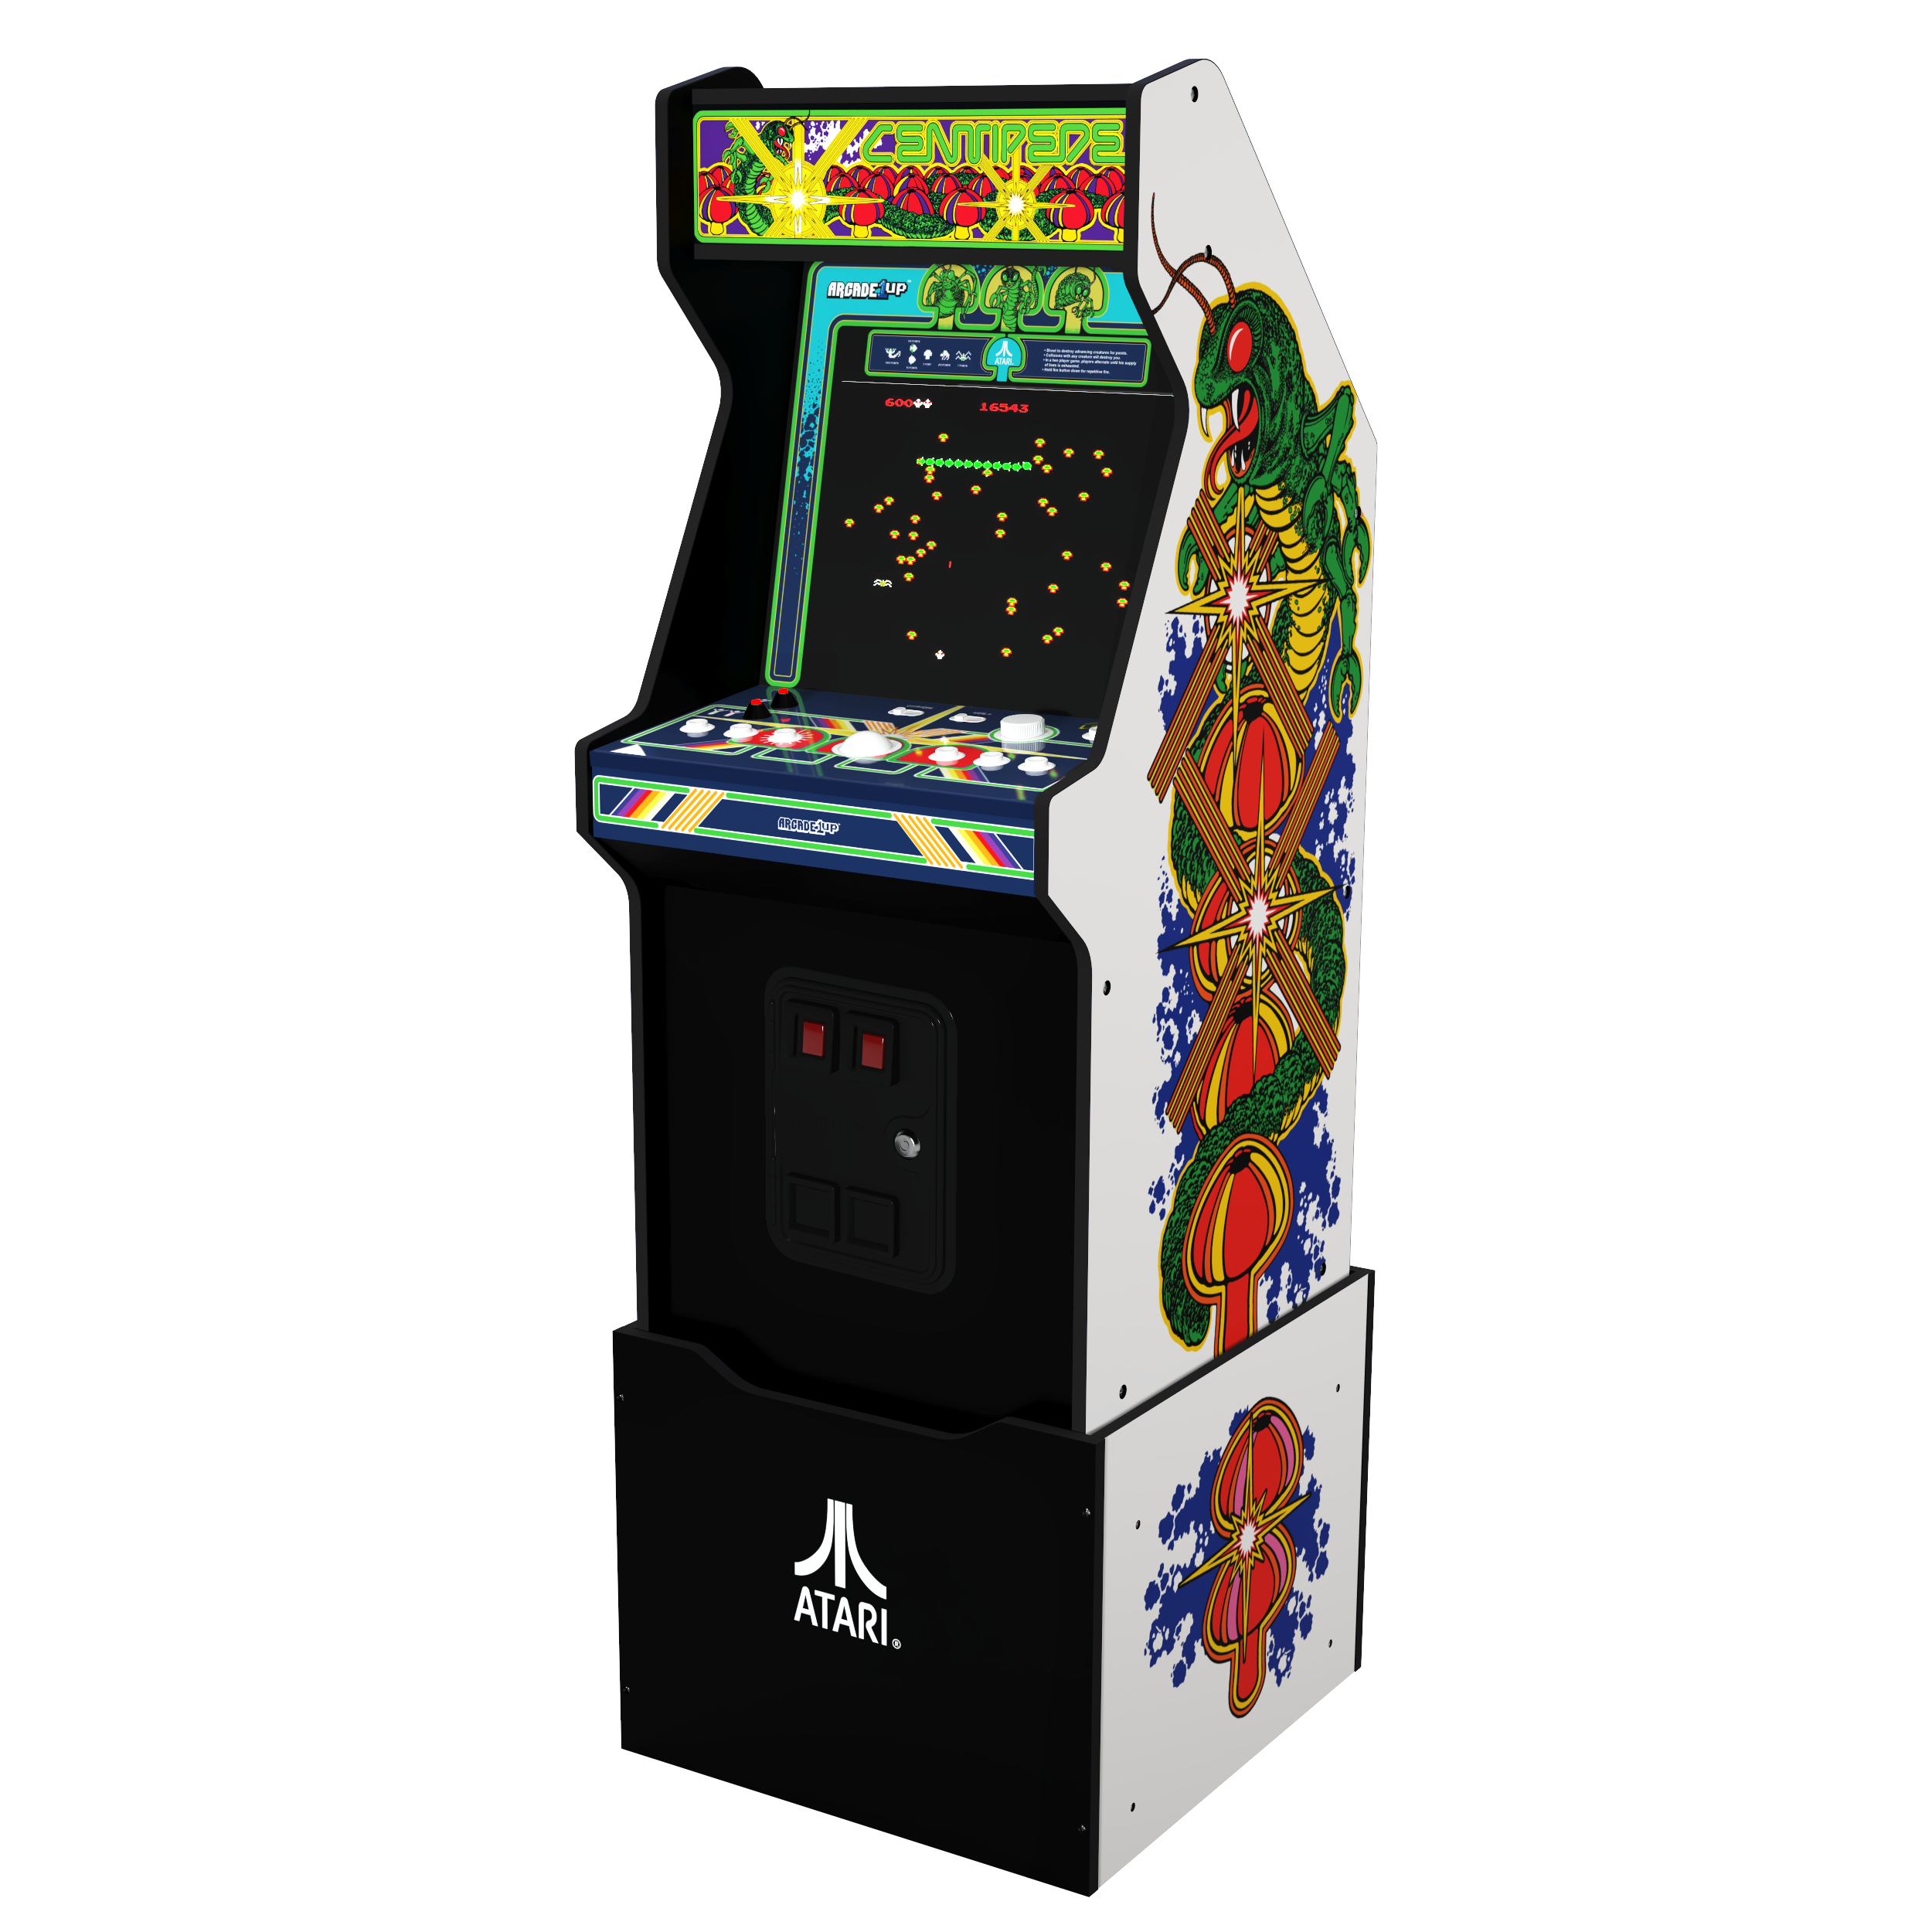 Image of Arcade1Up Atari Legacy Arcade Game Centipede Edition